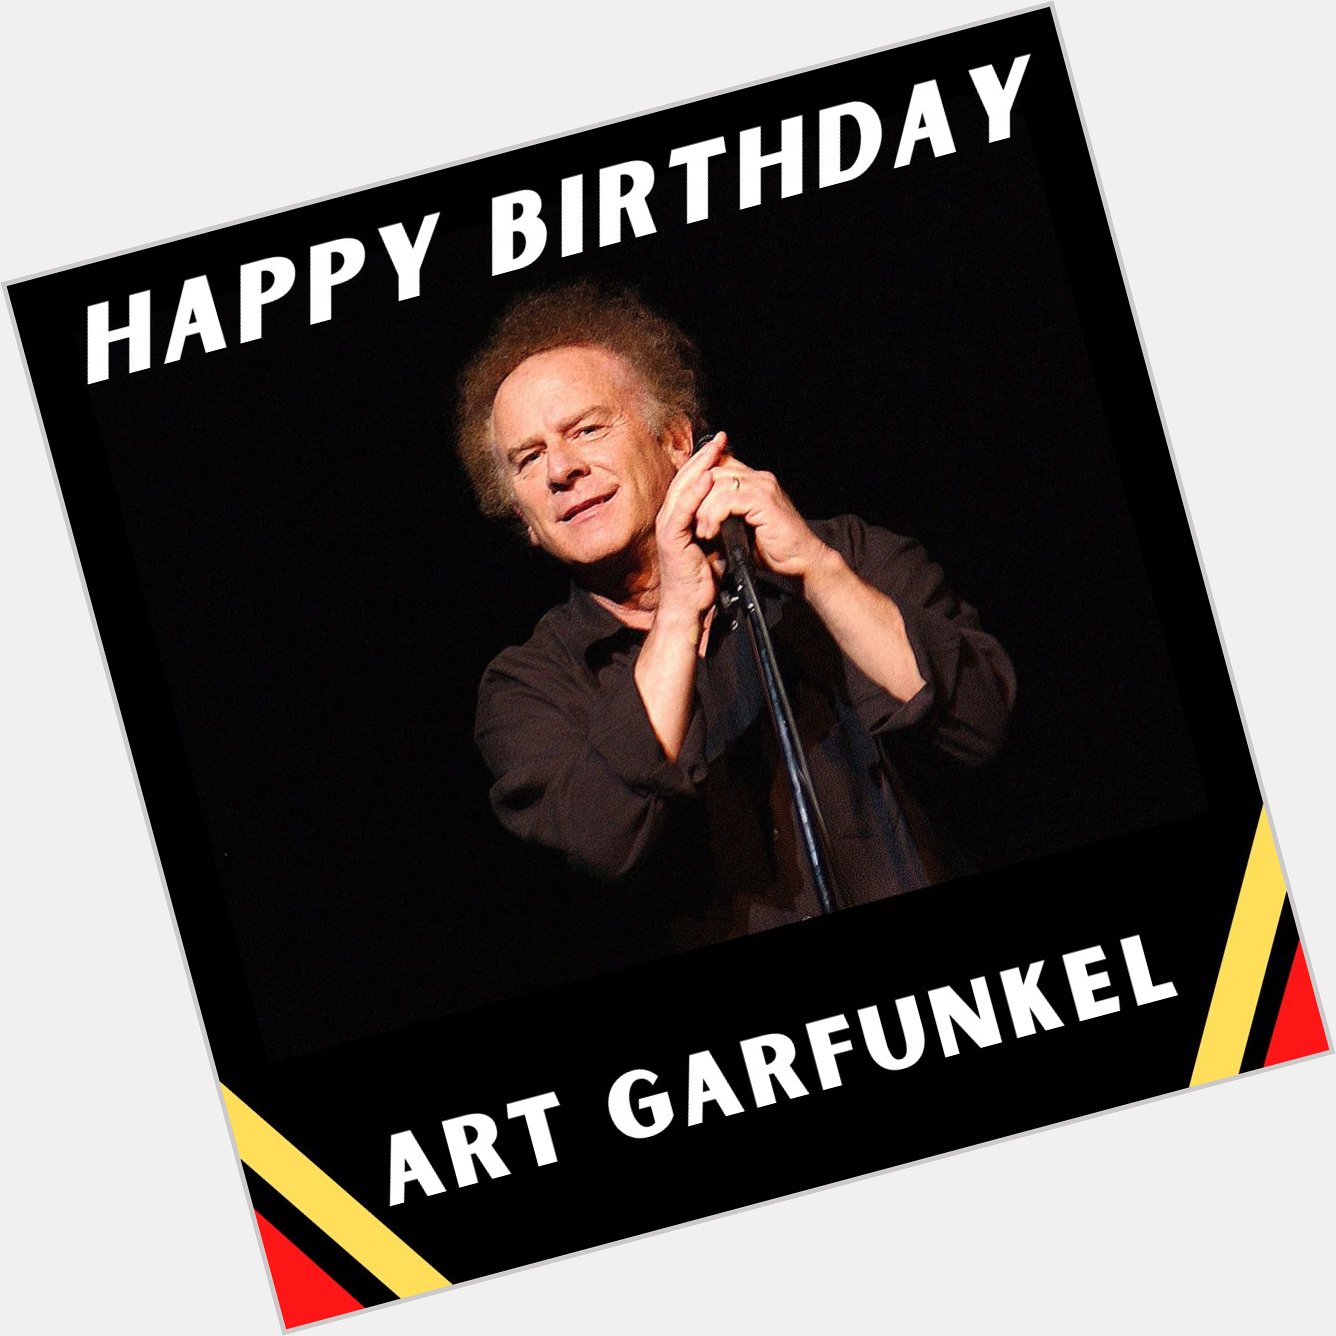 Wishing a happy birthday to Art Garfunkel

Photo by Getty Images 